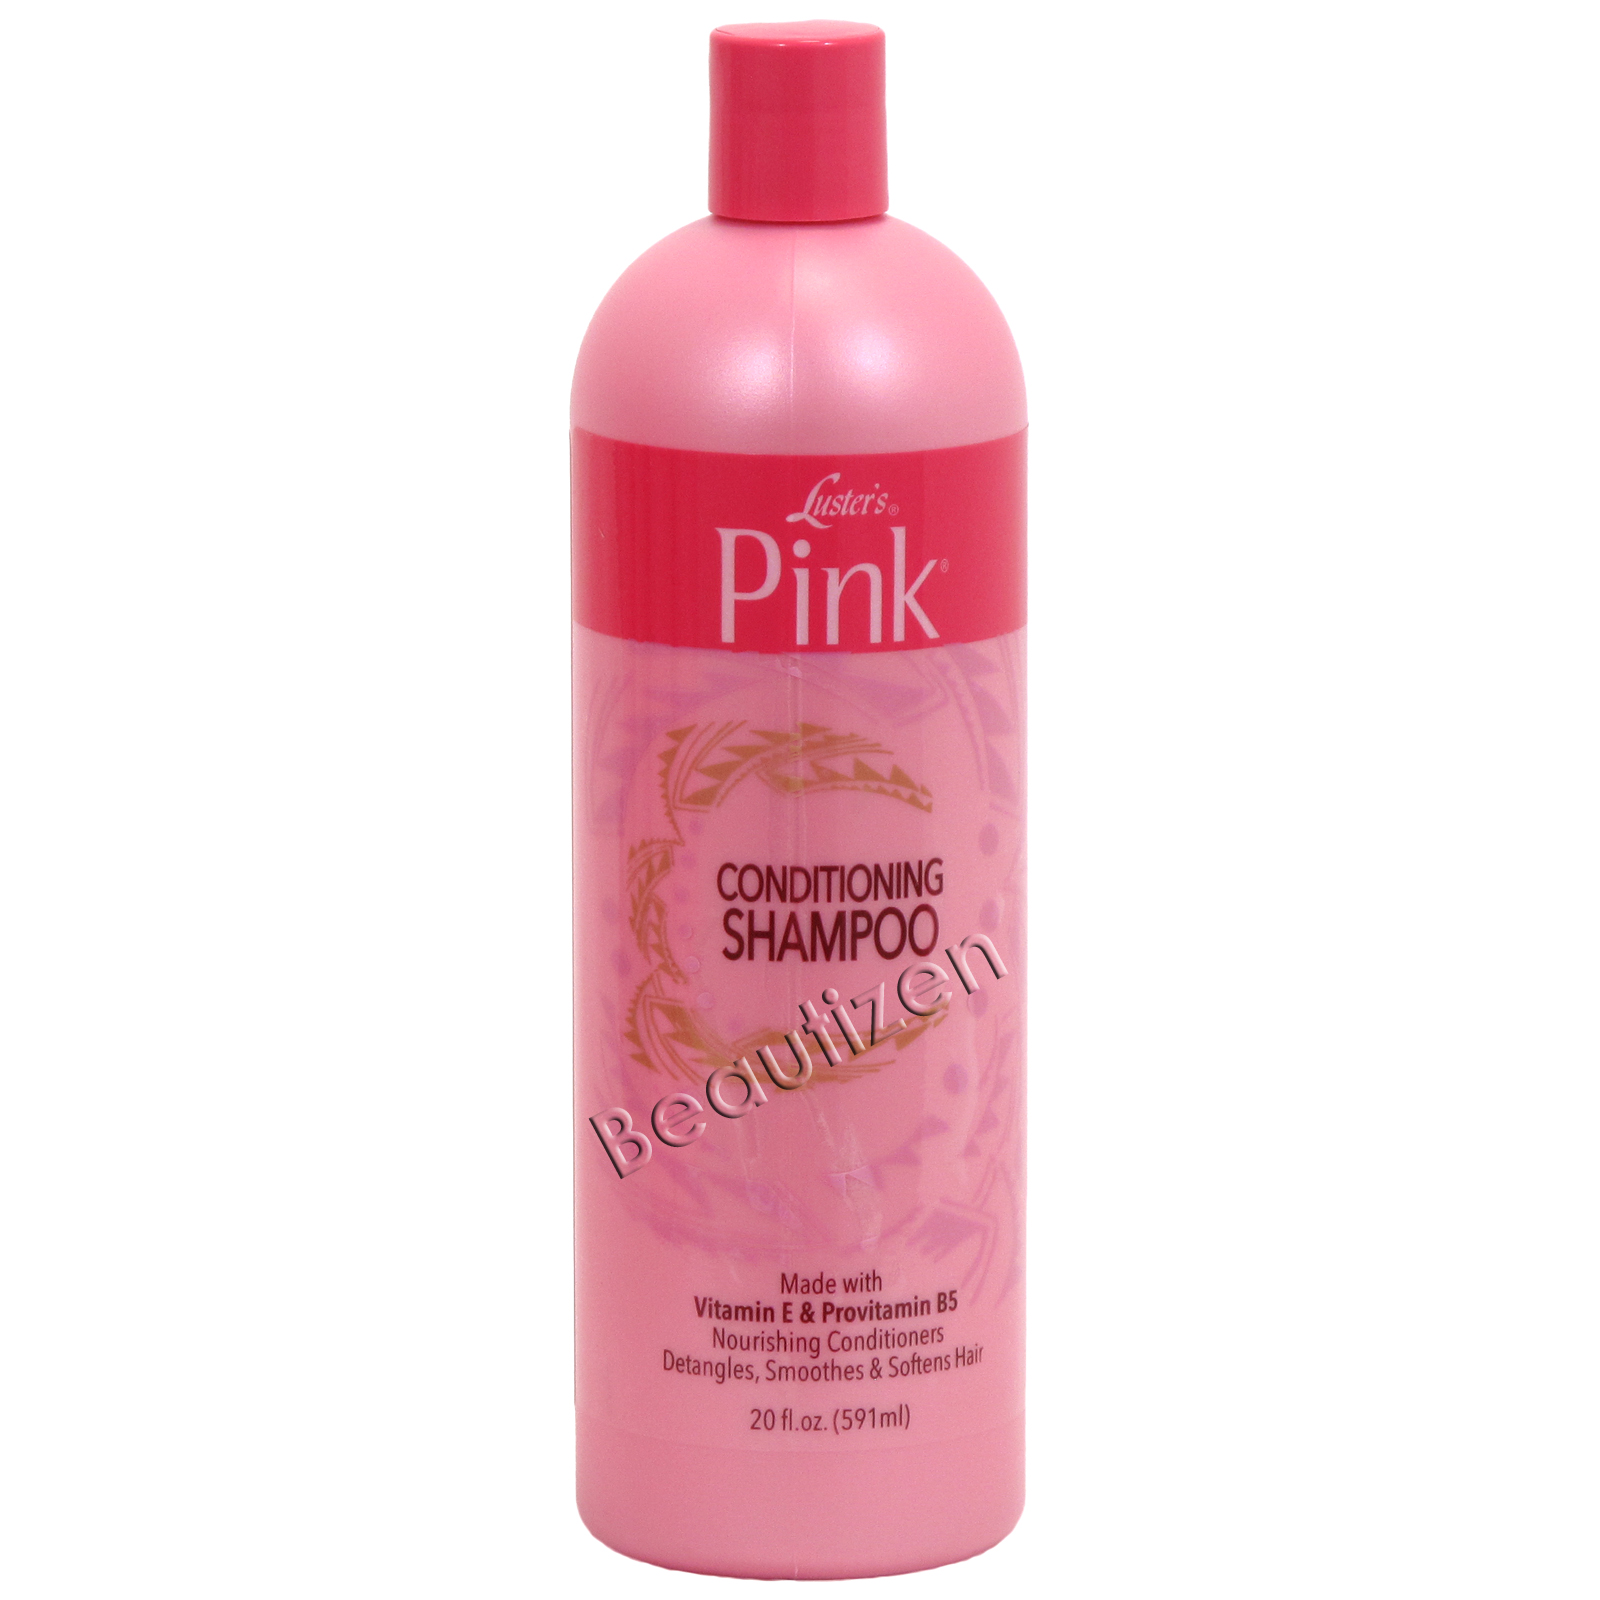 Devant toi Rester venin pink conditioning shampoo Aiguiser Sieste batterie